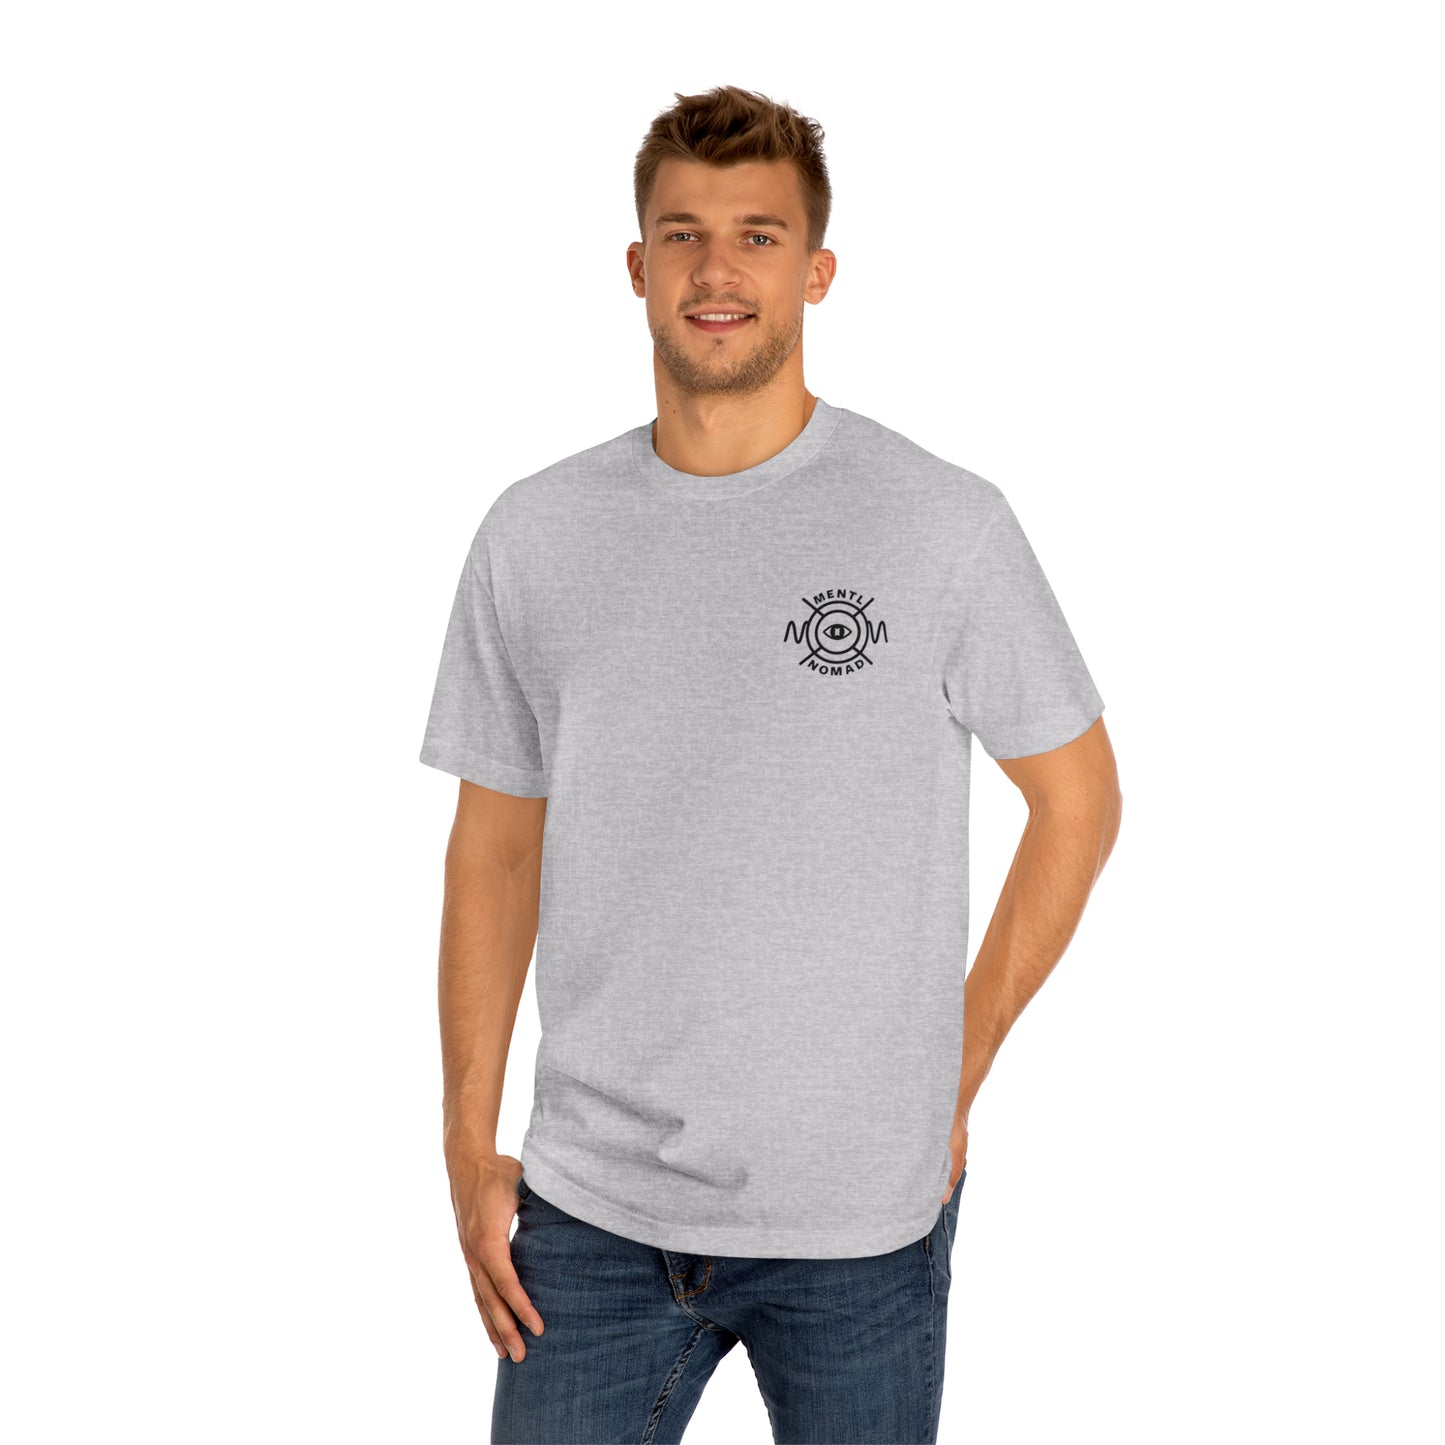 Mentl Nomad Crest (basics) T-Shirt